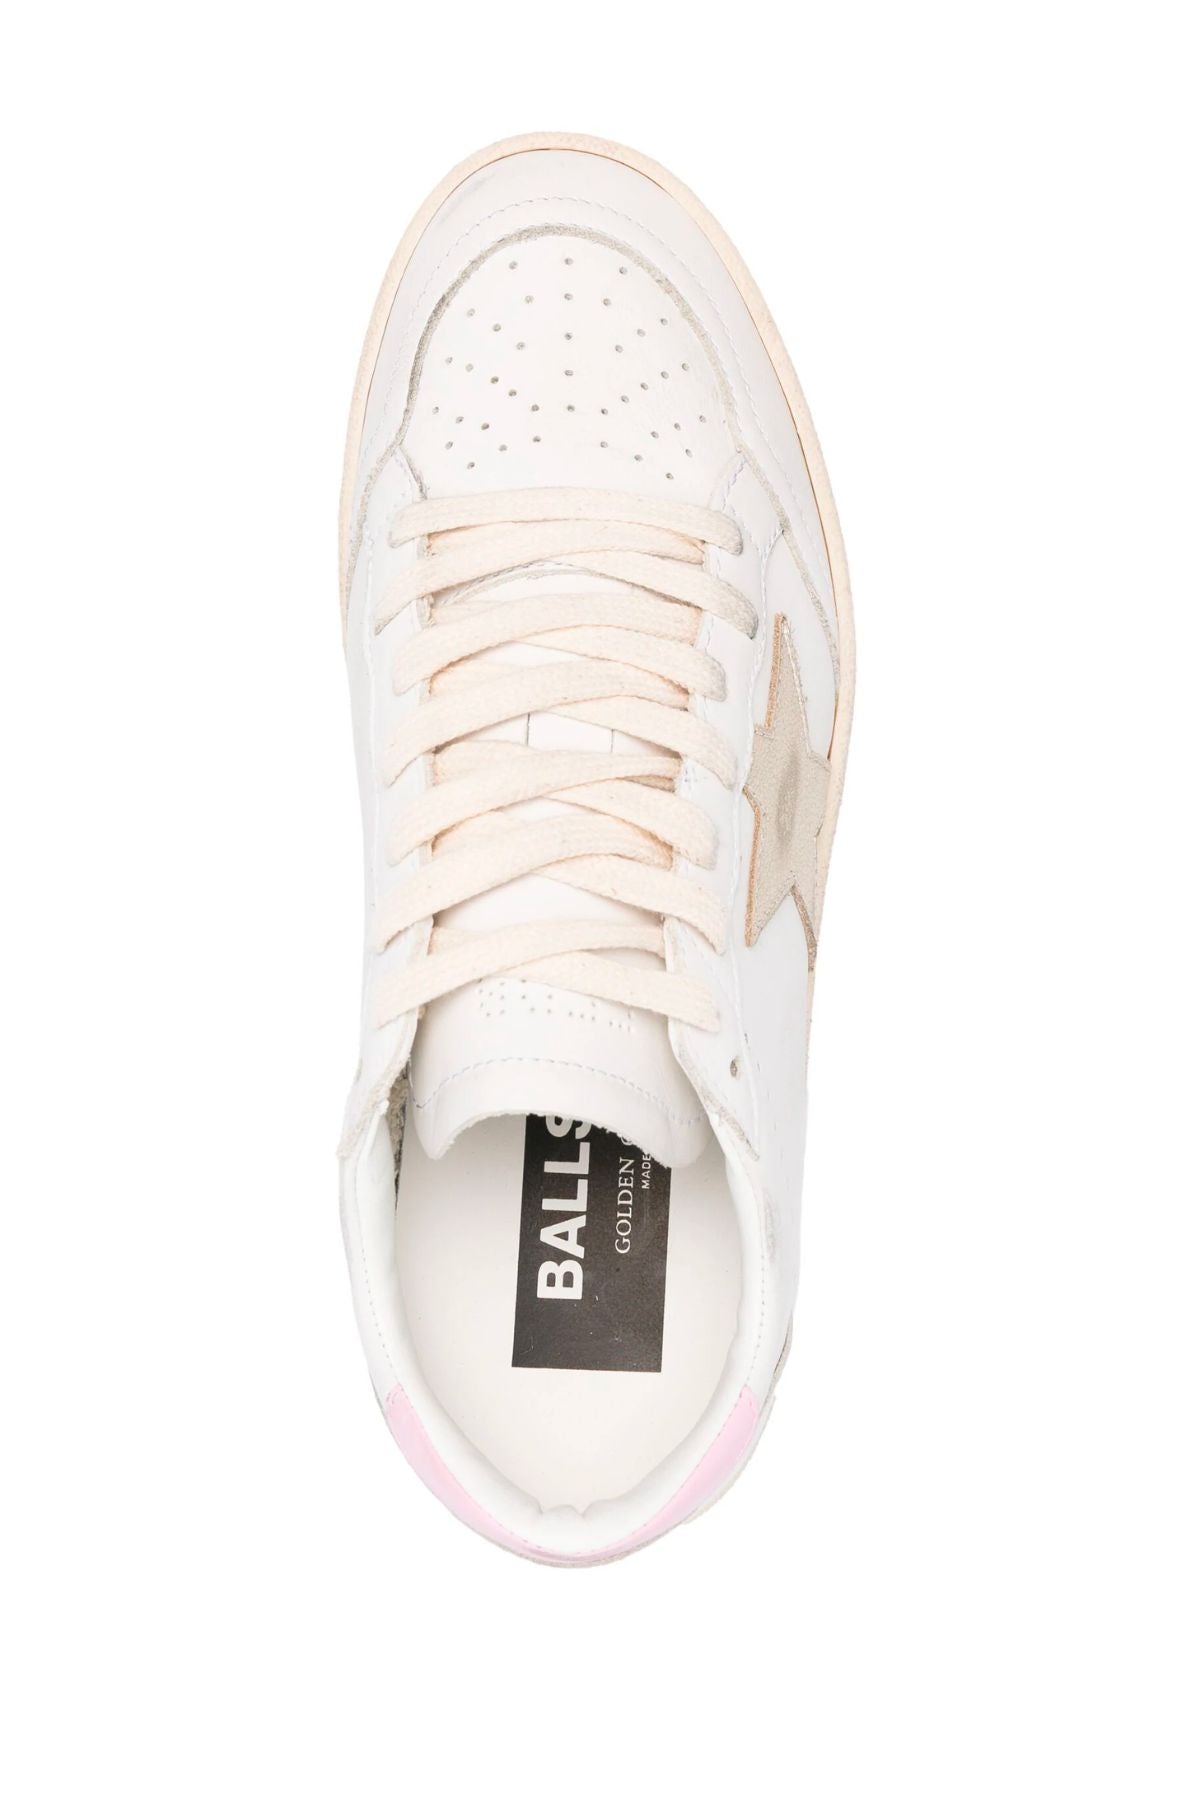 Golden Goose Ball Star Sneaker - White/ Platinum/ Orchid Pink